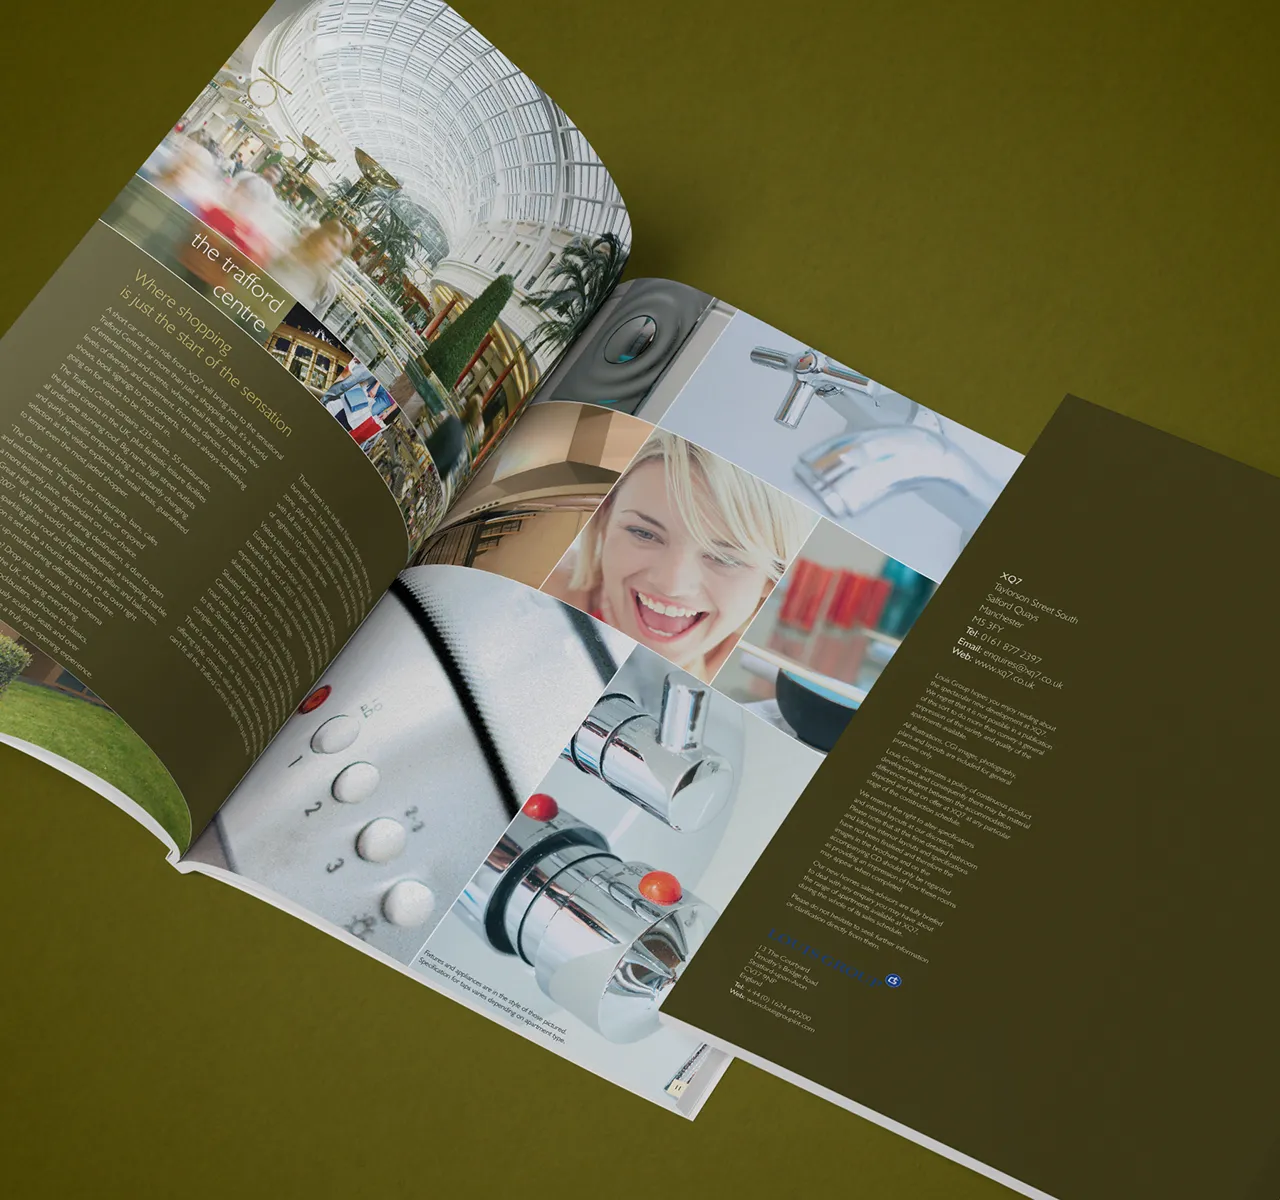 Salford Quays Property brochure, branding nonfacture Birmingham Design Studio